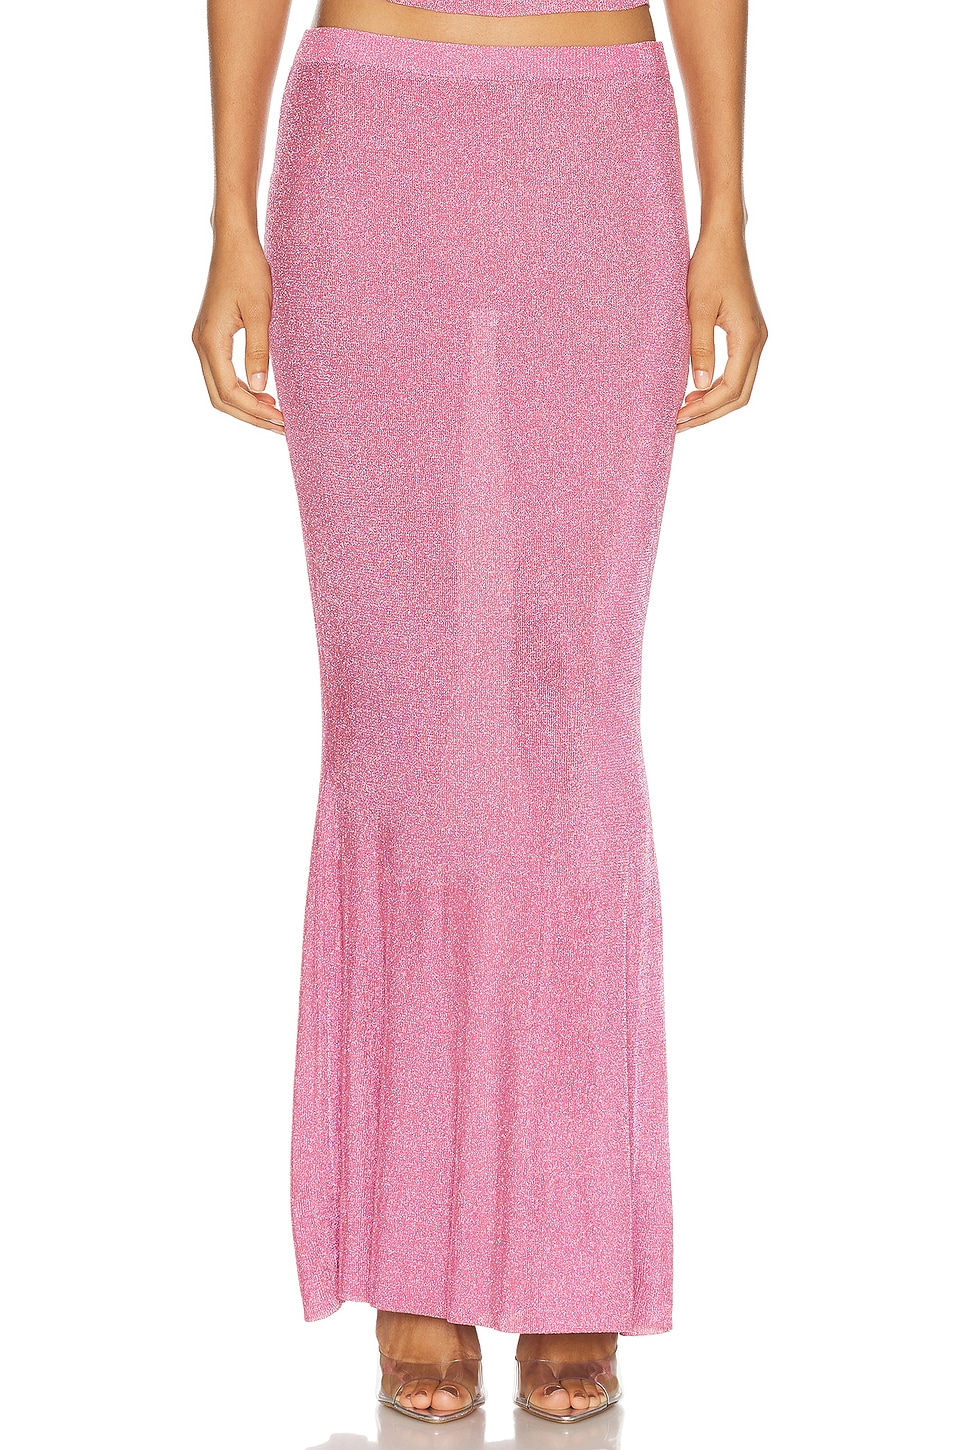 Image 1 of SER.O.YA Harmony Metallic Knit Maxi Skirt in Bubblegum Pink